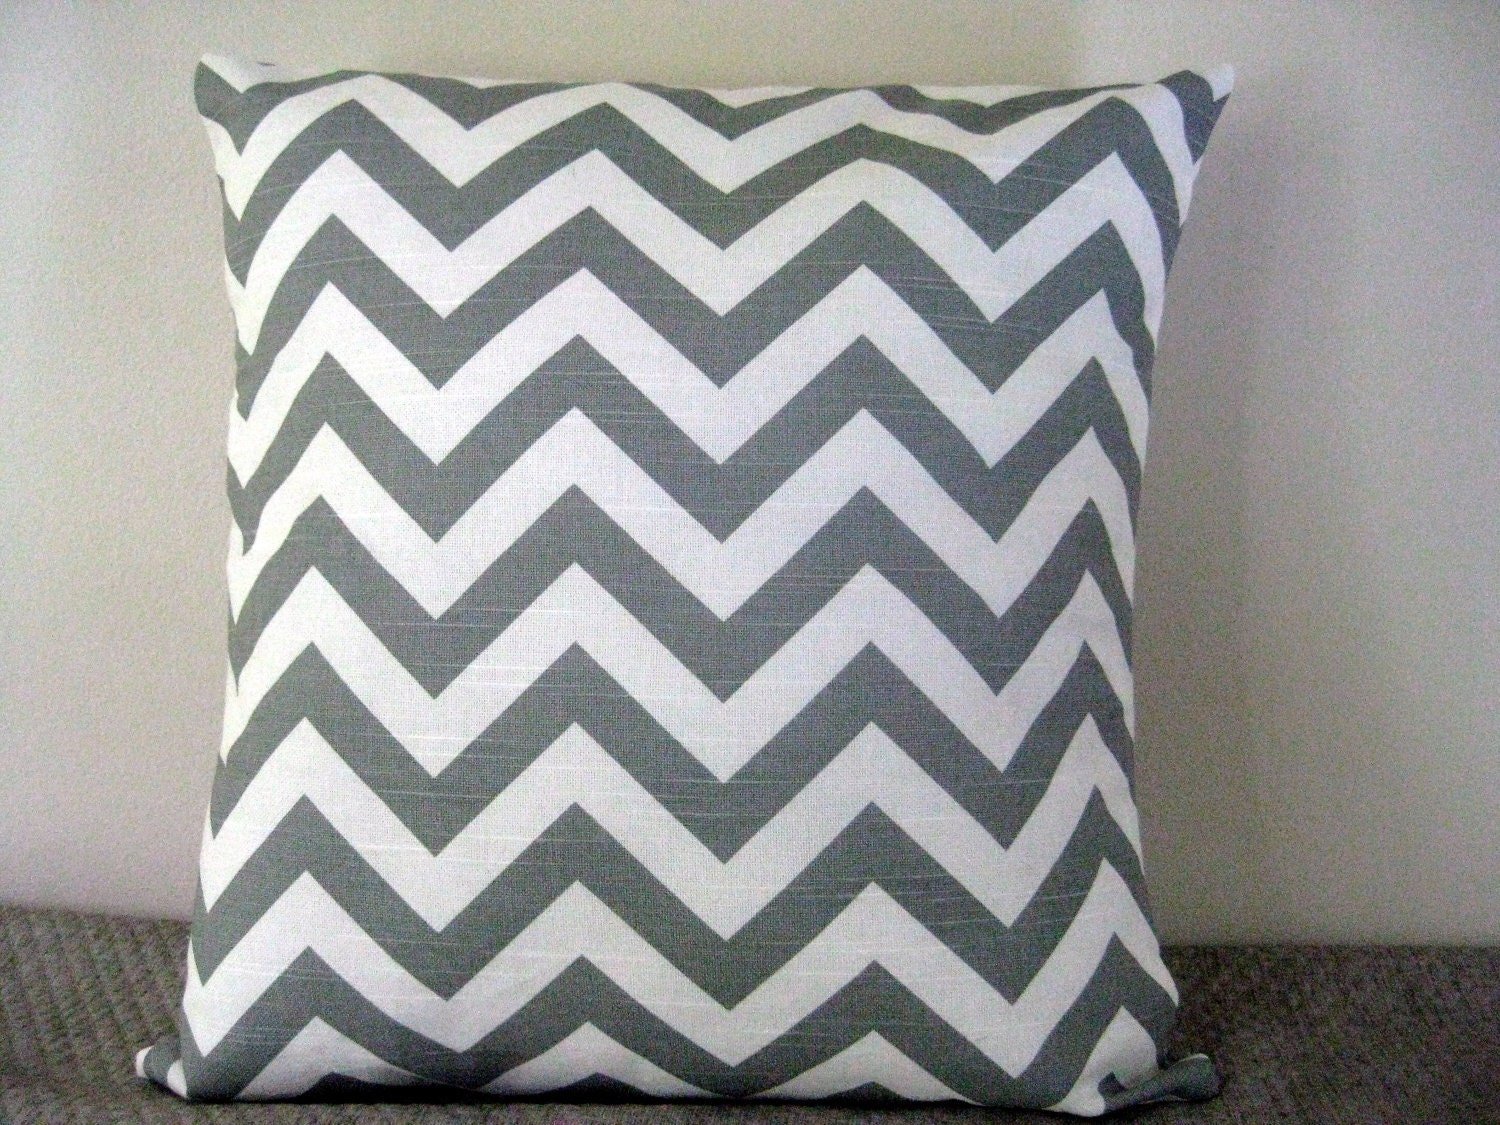 Pillow Cover: One 18" Gray and White Chevron Stripe Pillow